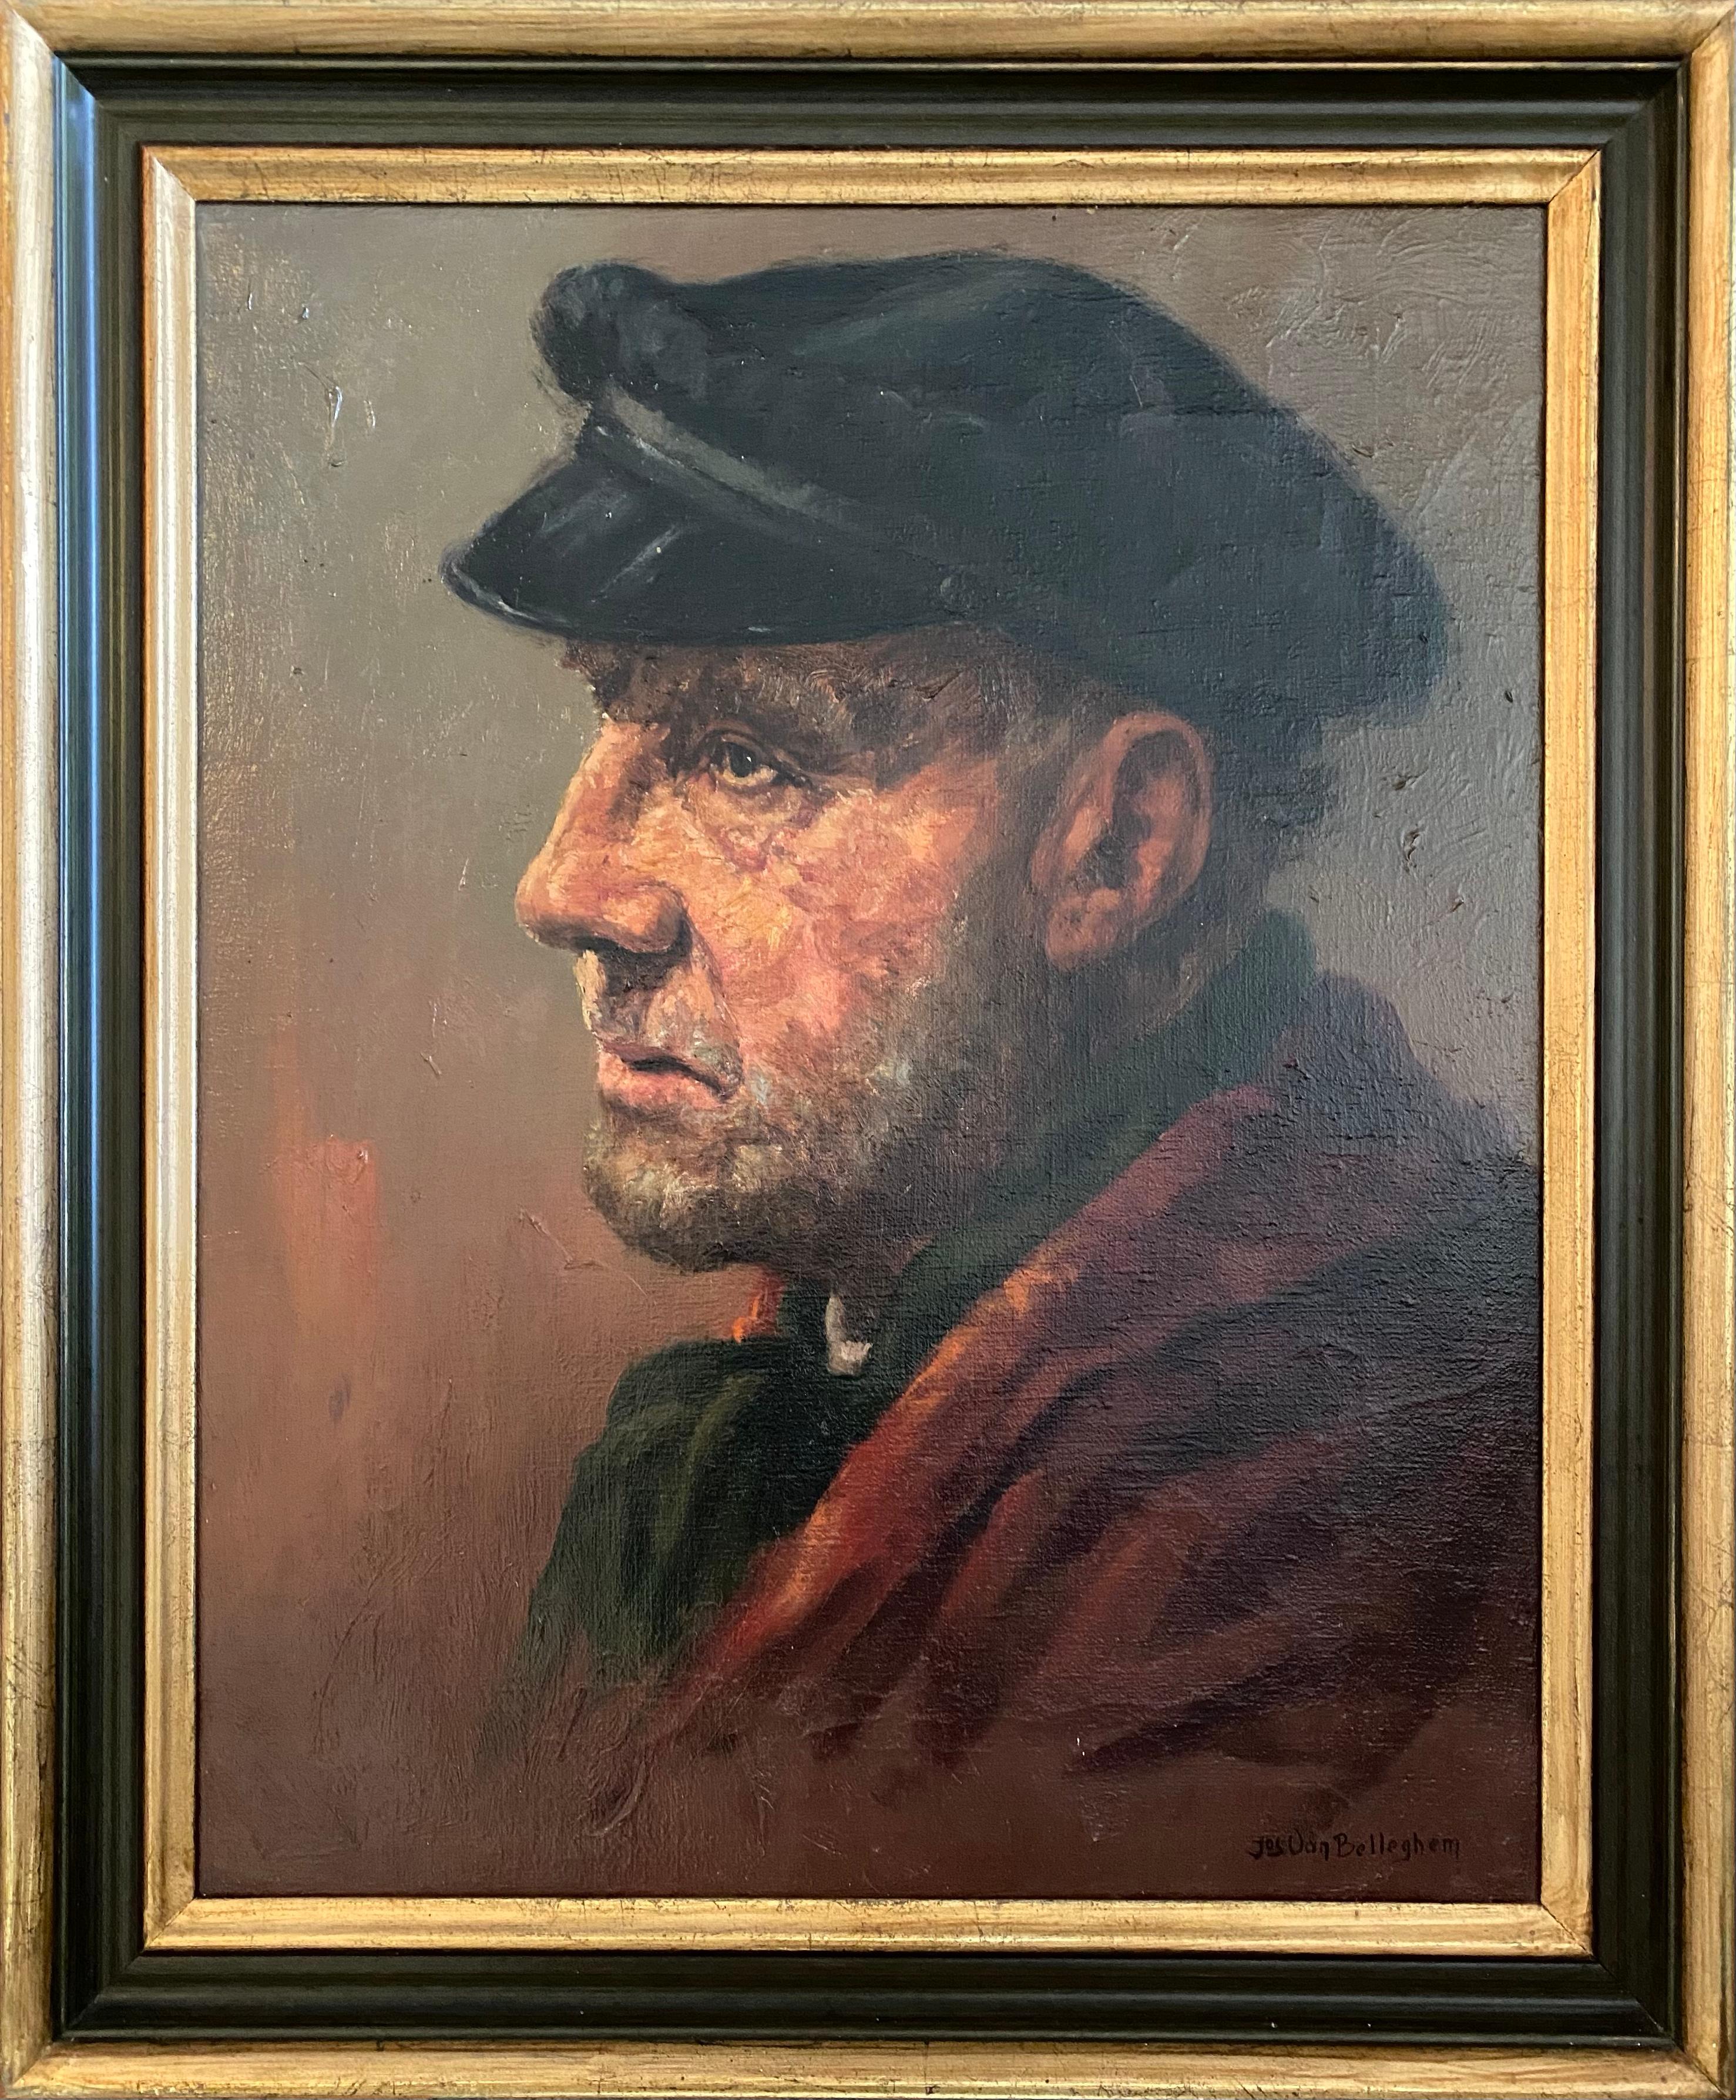 A Portrait of a Fisherman, Jos Van Belleghem, 1894 – 1970, Belgian Painter